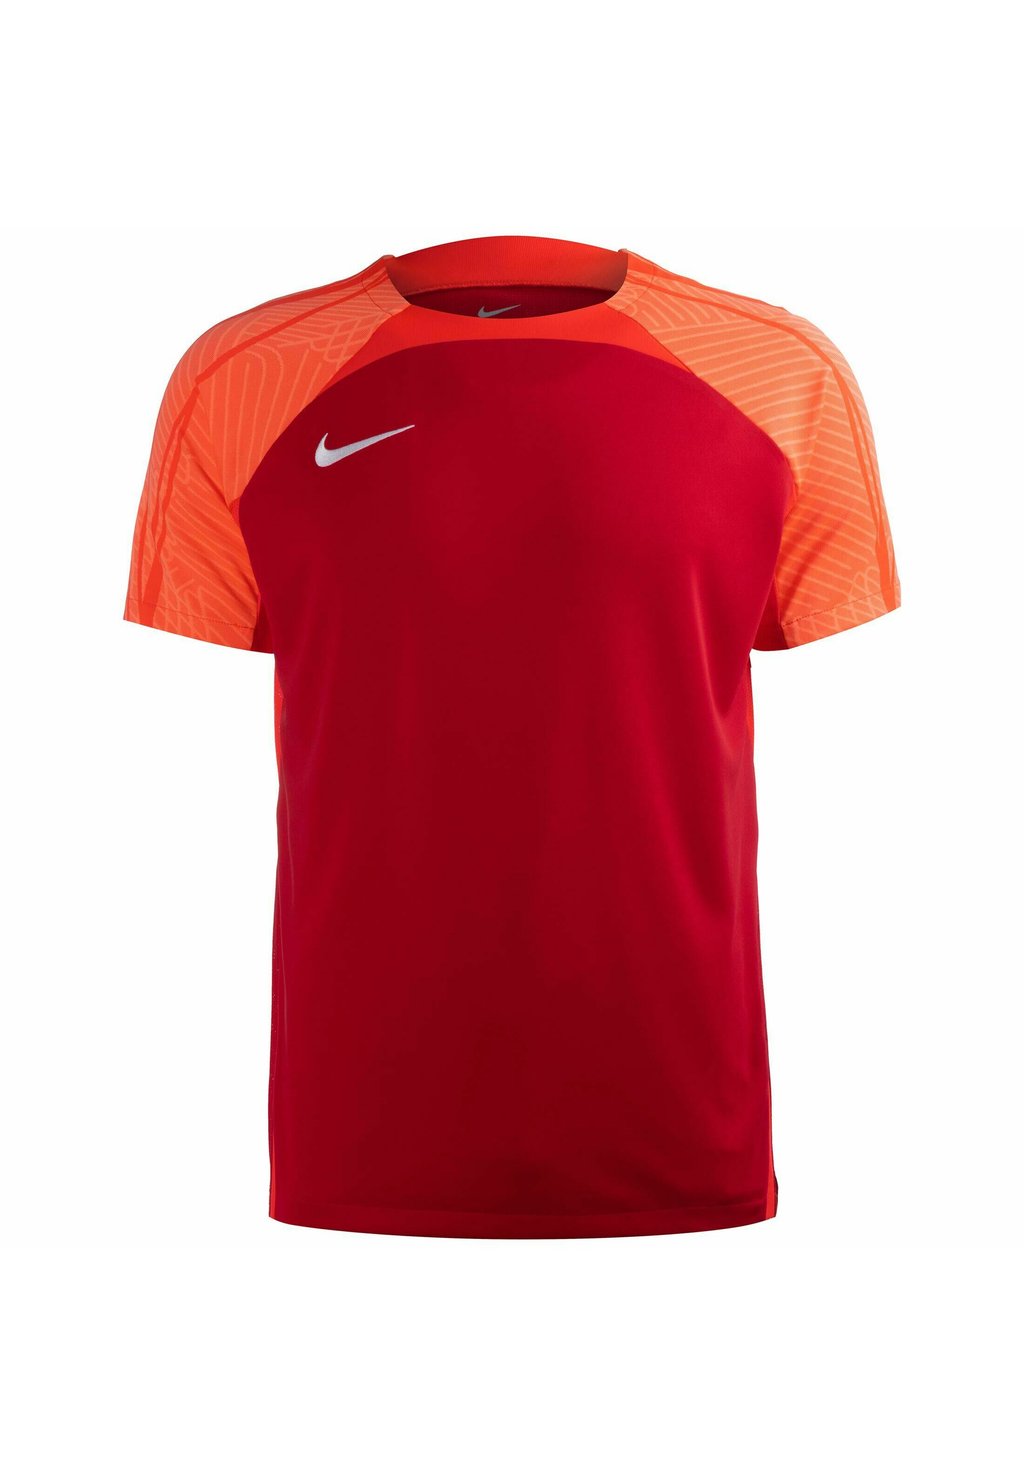 Спортивная футболка Strike Iii Fussball Nike, цвет university red bright crimson white